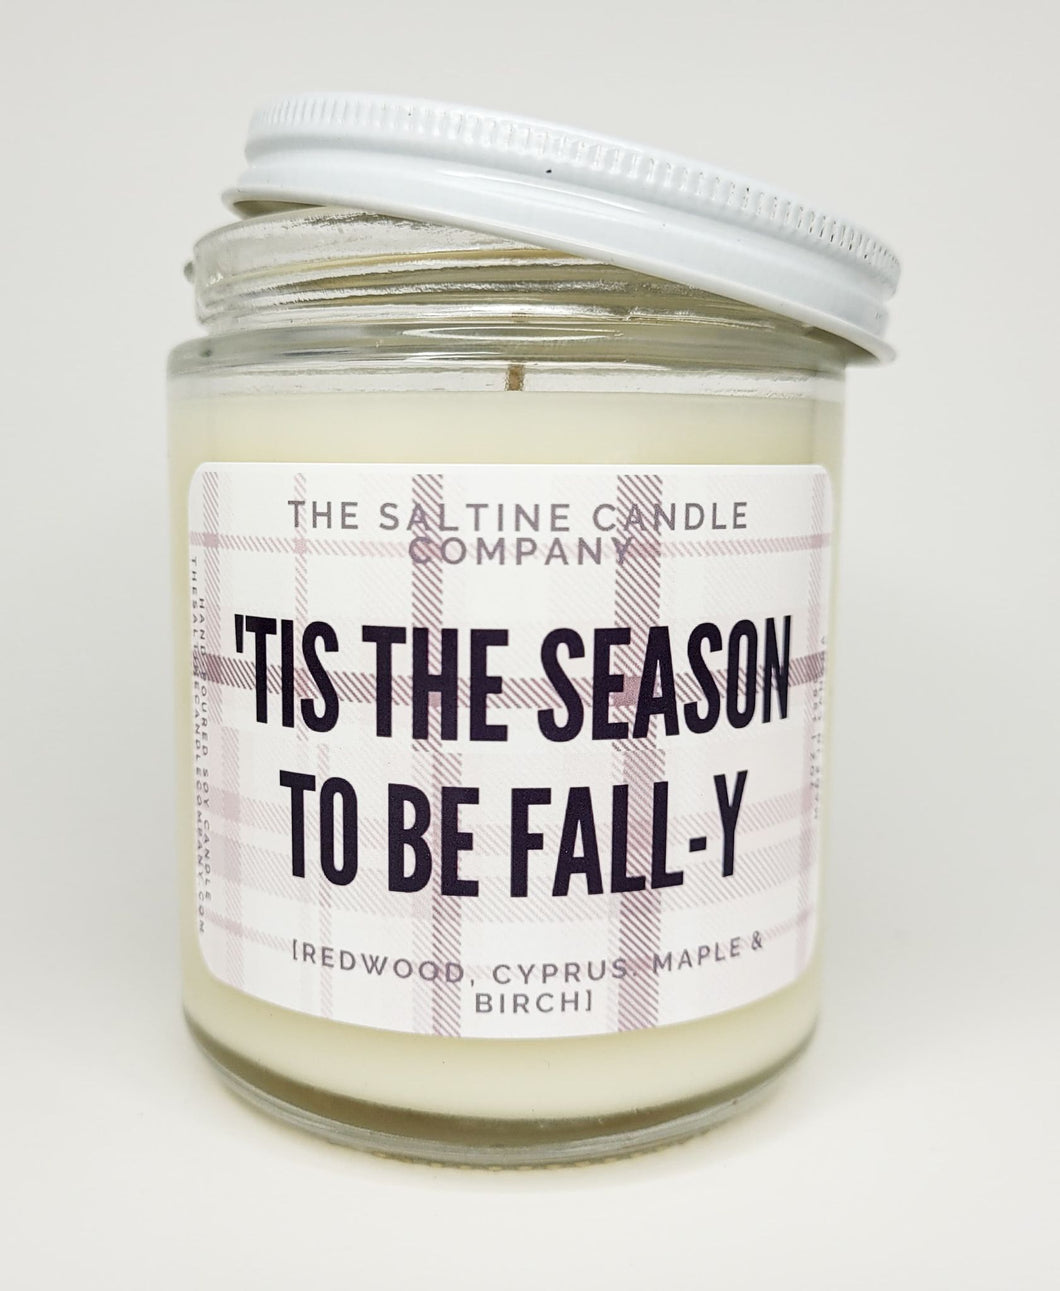 Tis the season to be fall-y